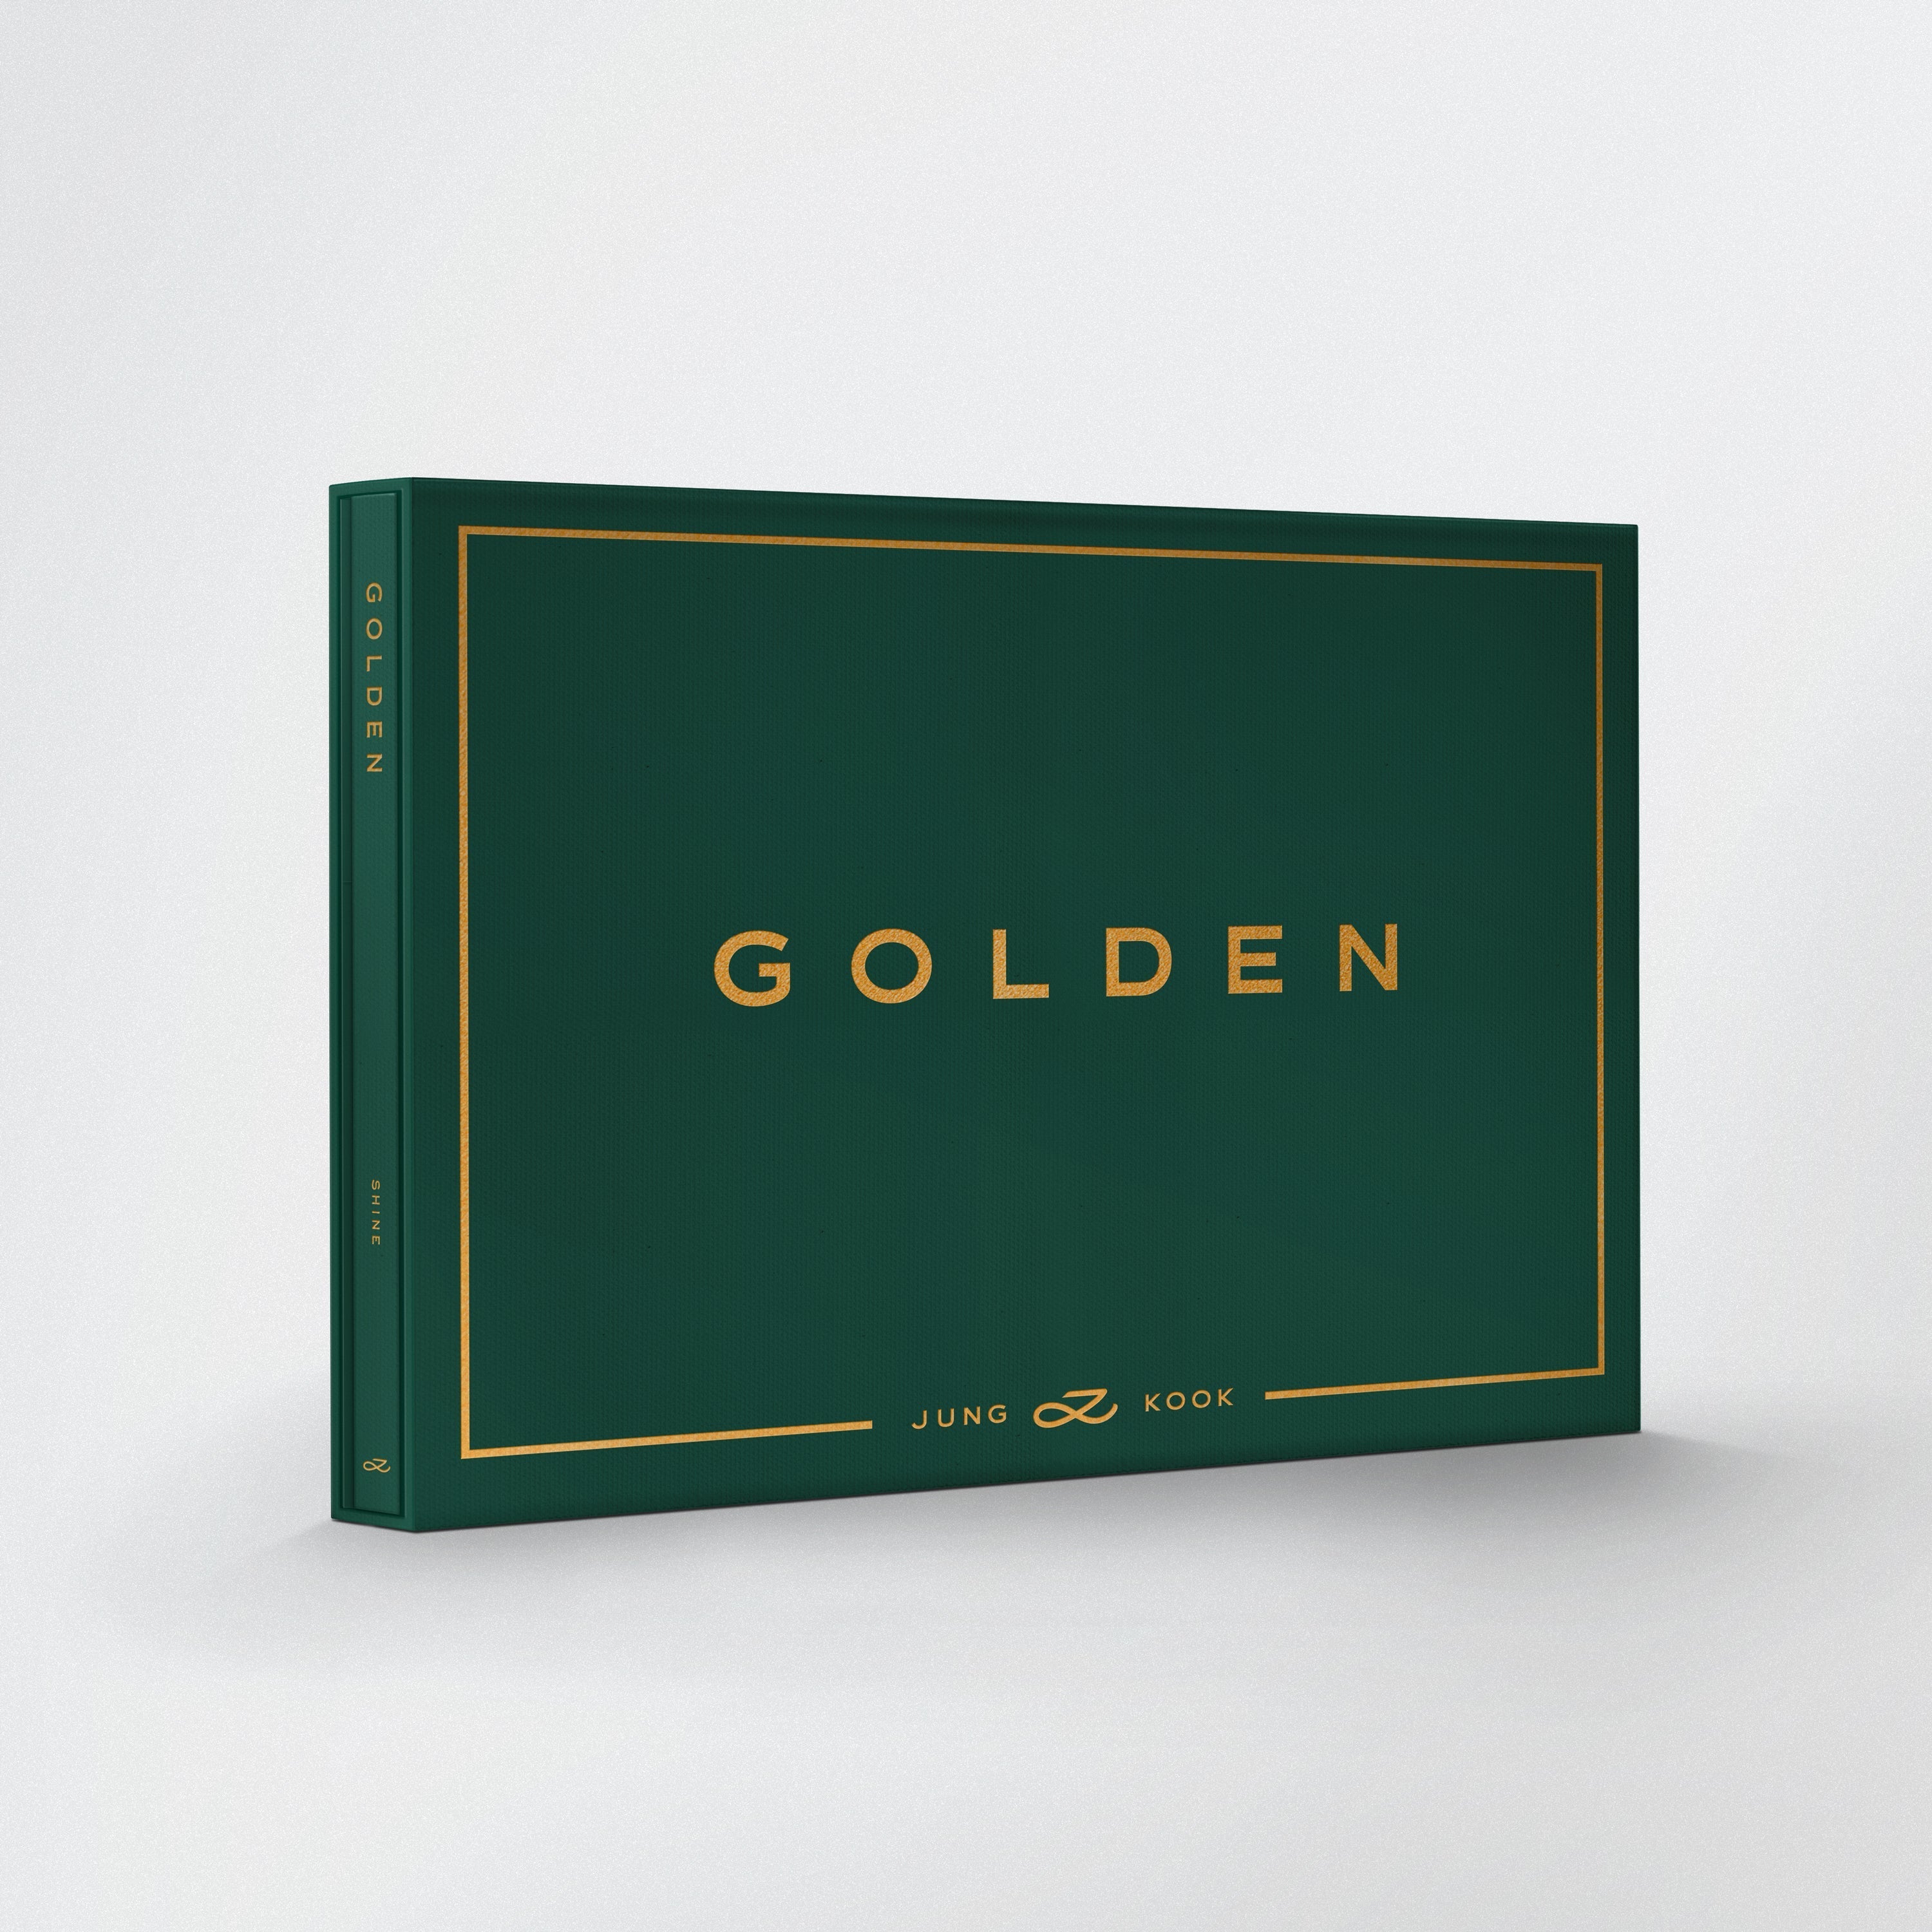 Jungkook of BTS shares 'Golden' album preview 